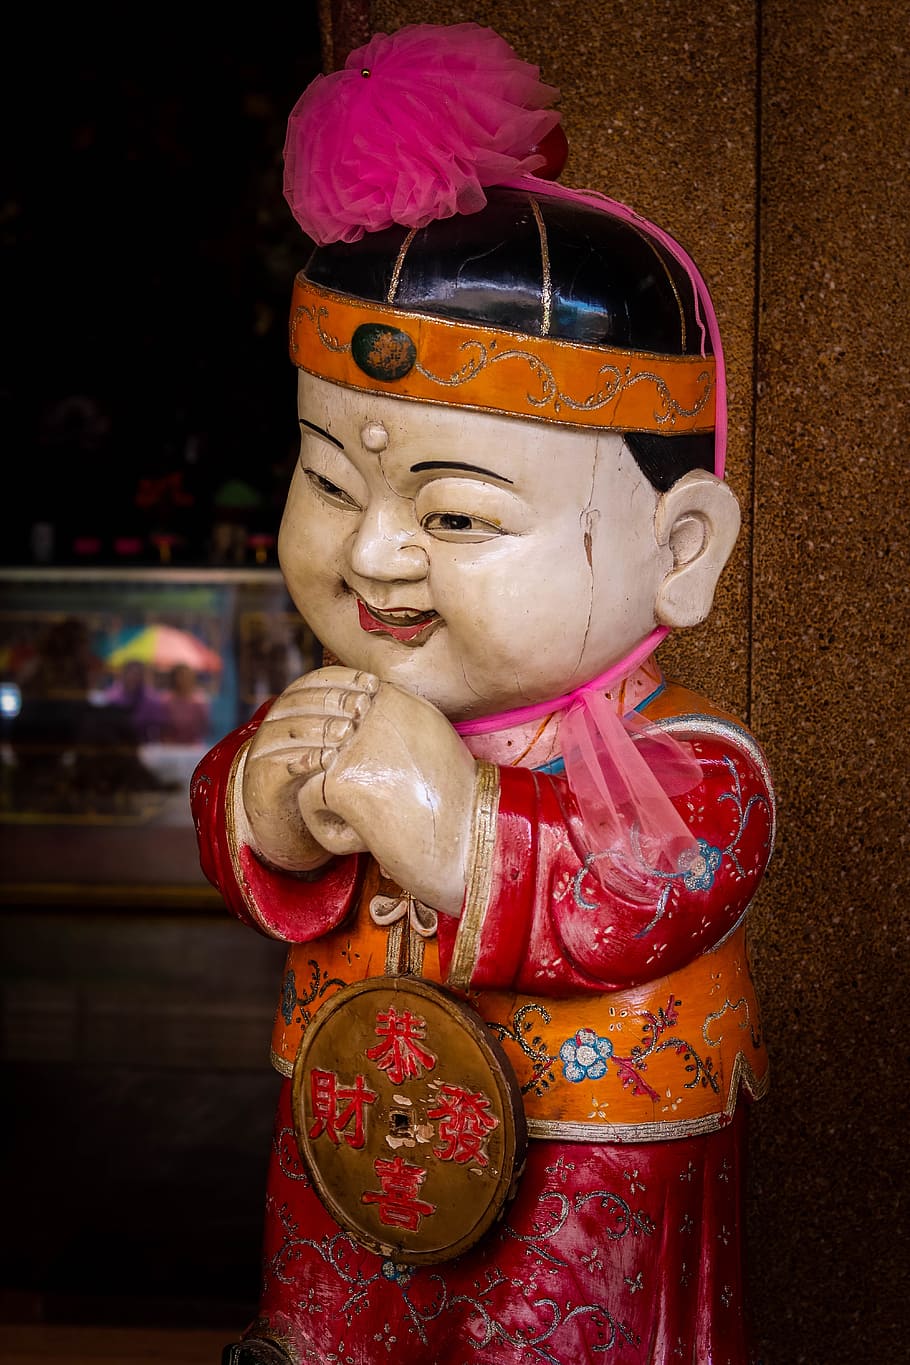 Patung, Boneka, Orang Cina, orang-orang Cina, iman, salam, ziarah, agama, boneka cina, thailand